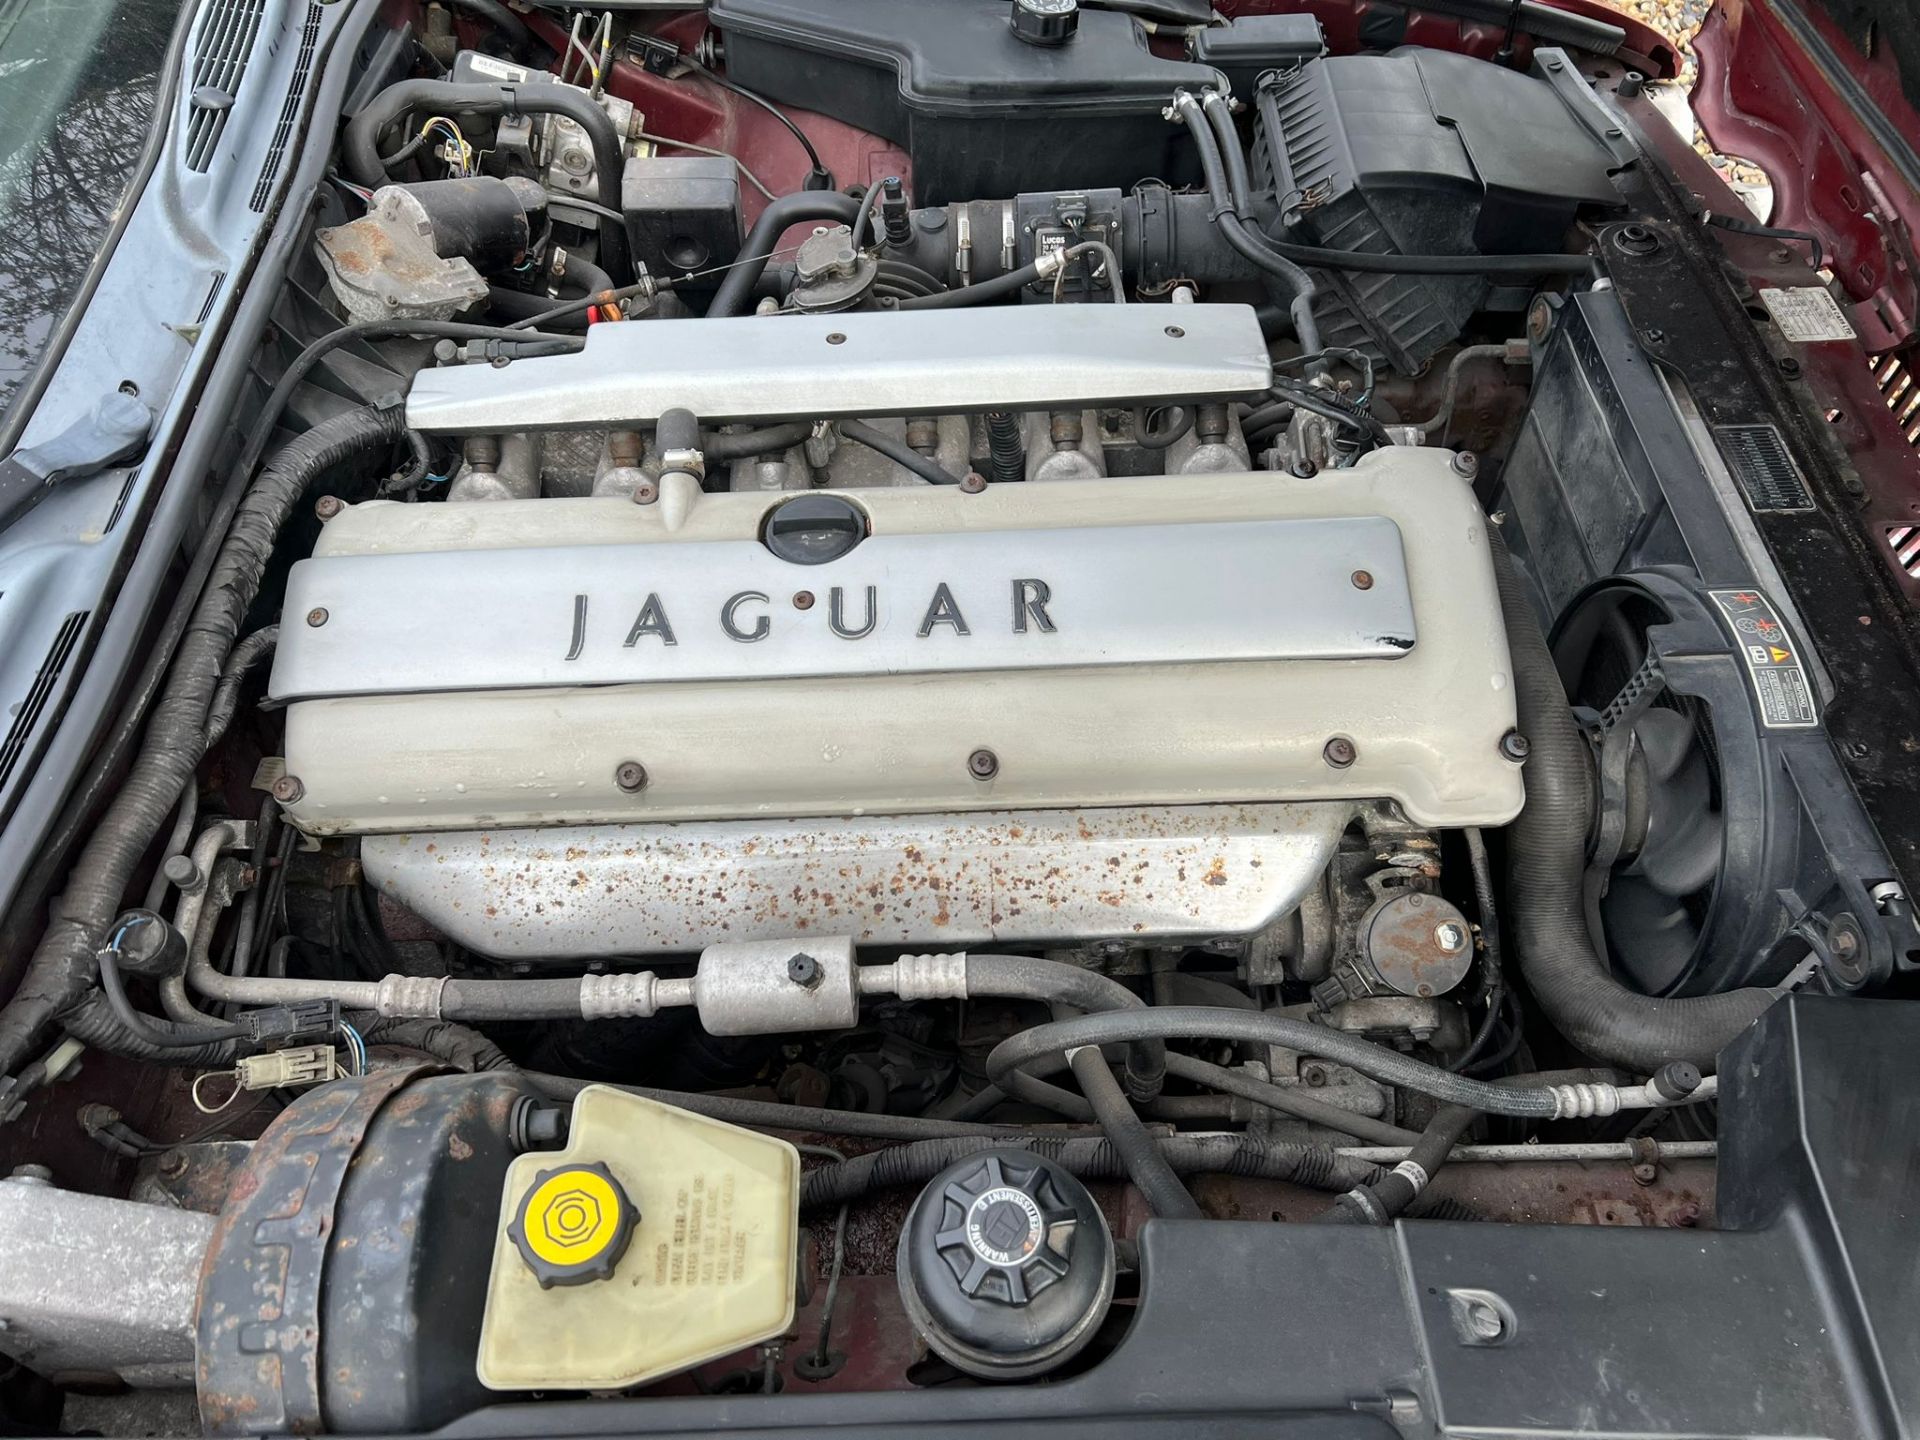 Jaguar XJ6 Sport 1995 - Image 18 of 25